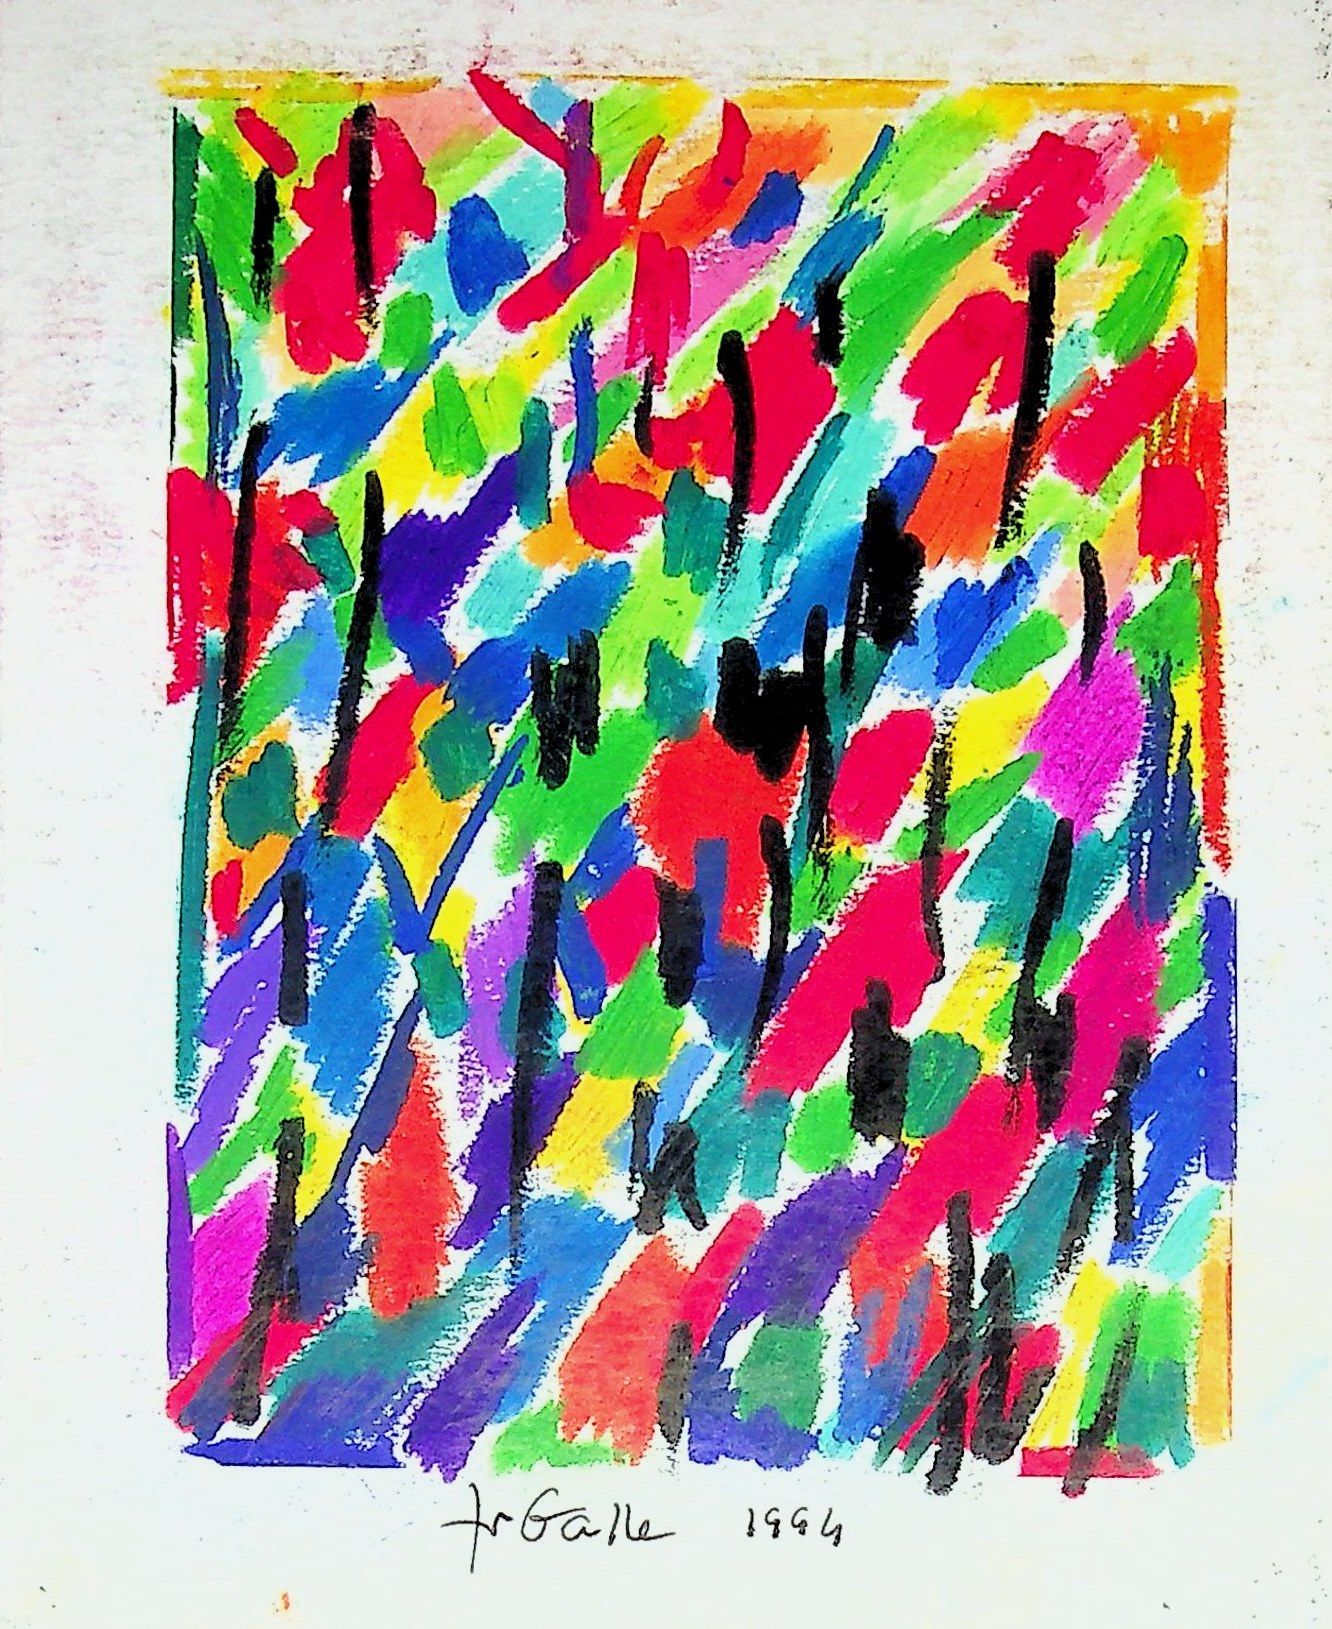 Françoise Galle 弗朗索瓦丝-加勒 (1940)

小鹿森林, 1994

油性粉笔画

底部有艺术家的签名和日期

牛皮纸上 16.5 x 13&hellip;